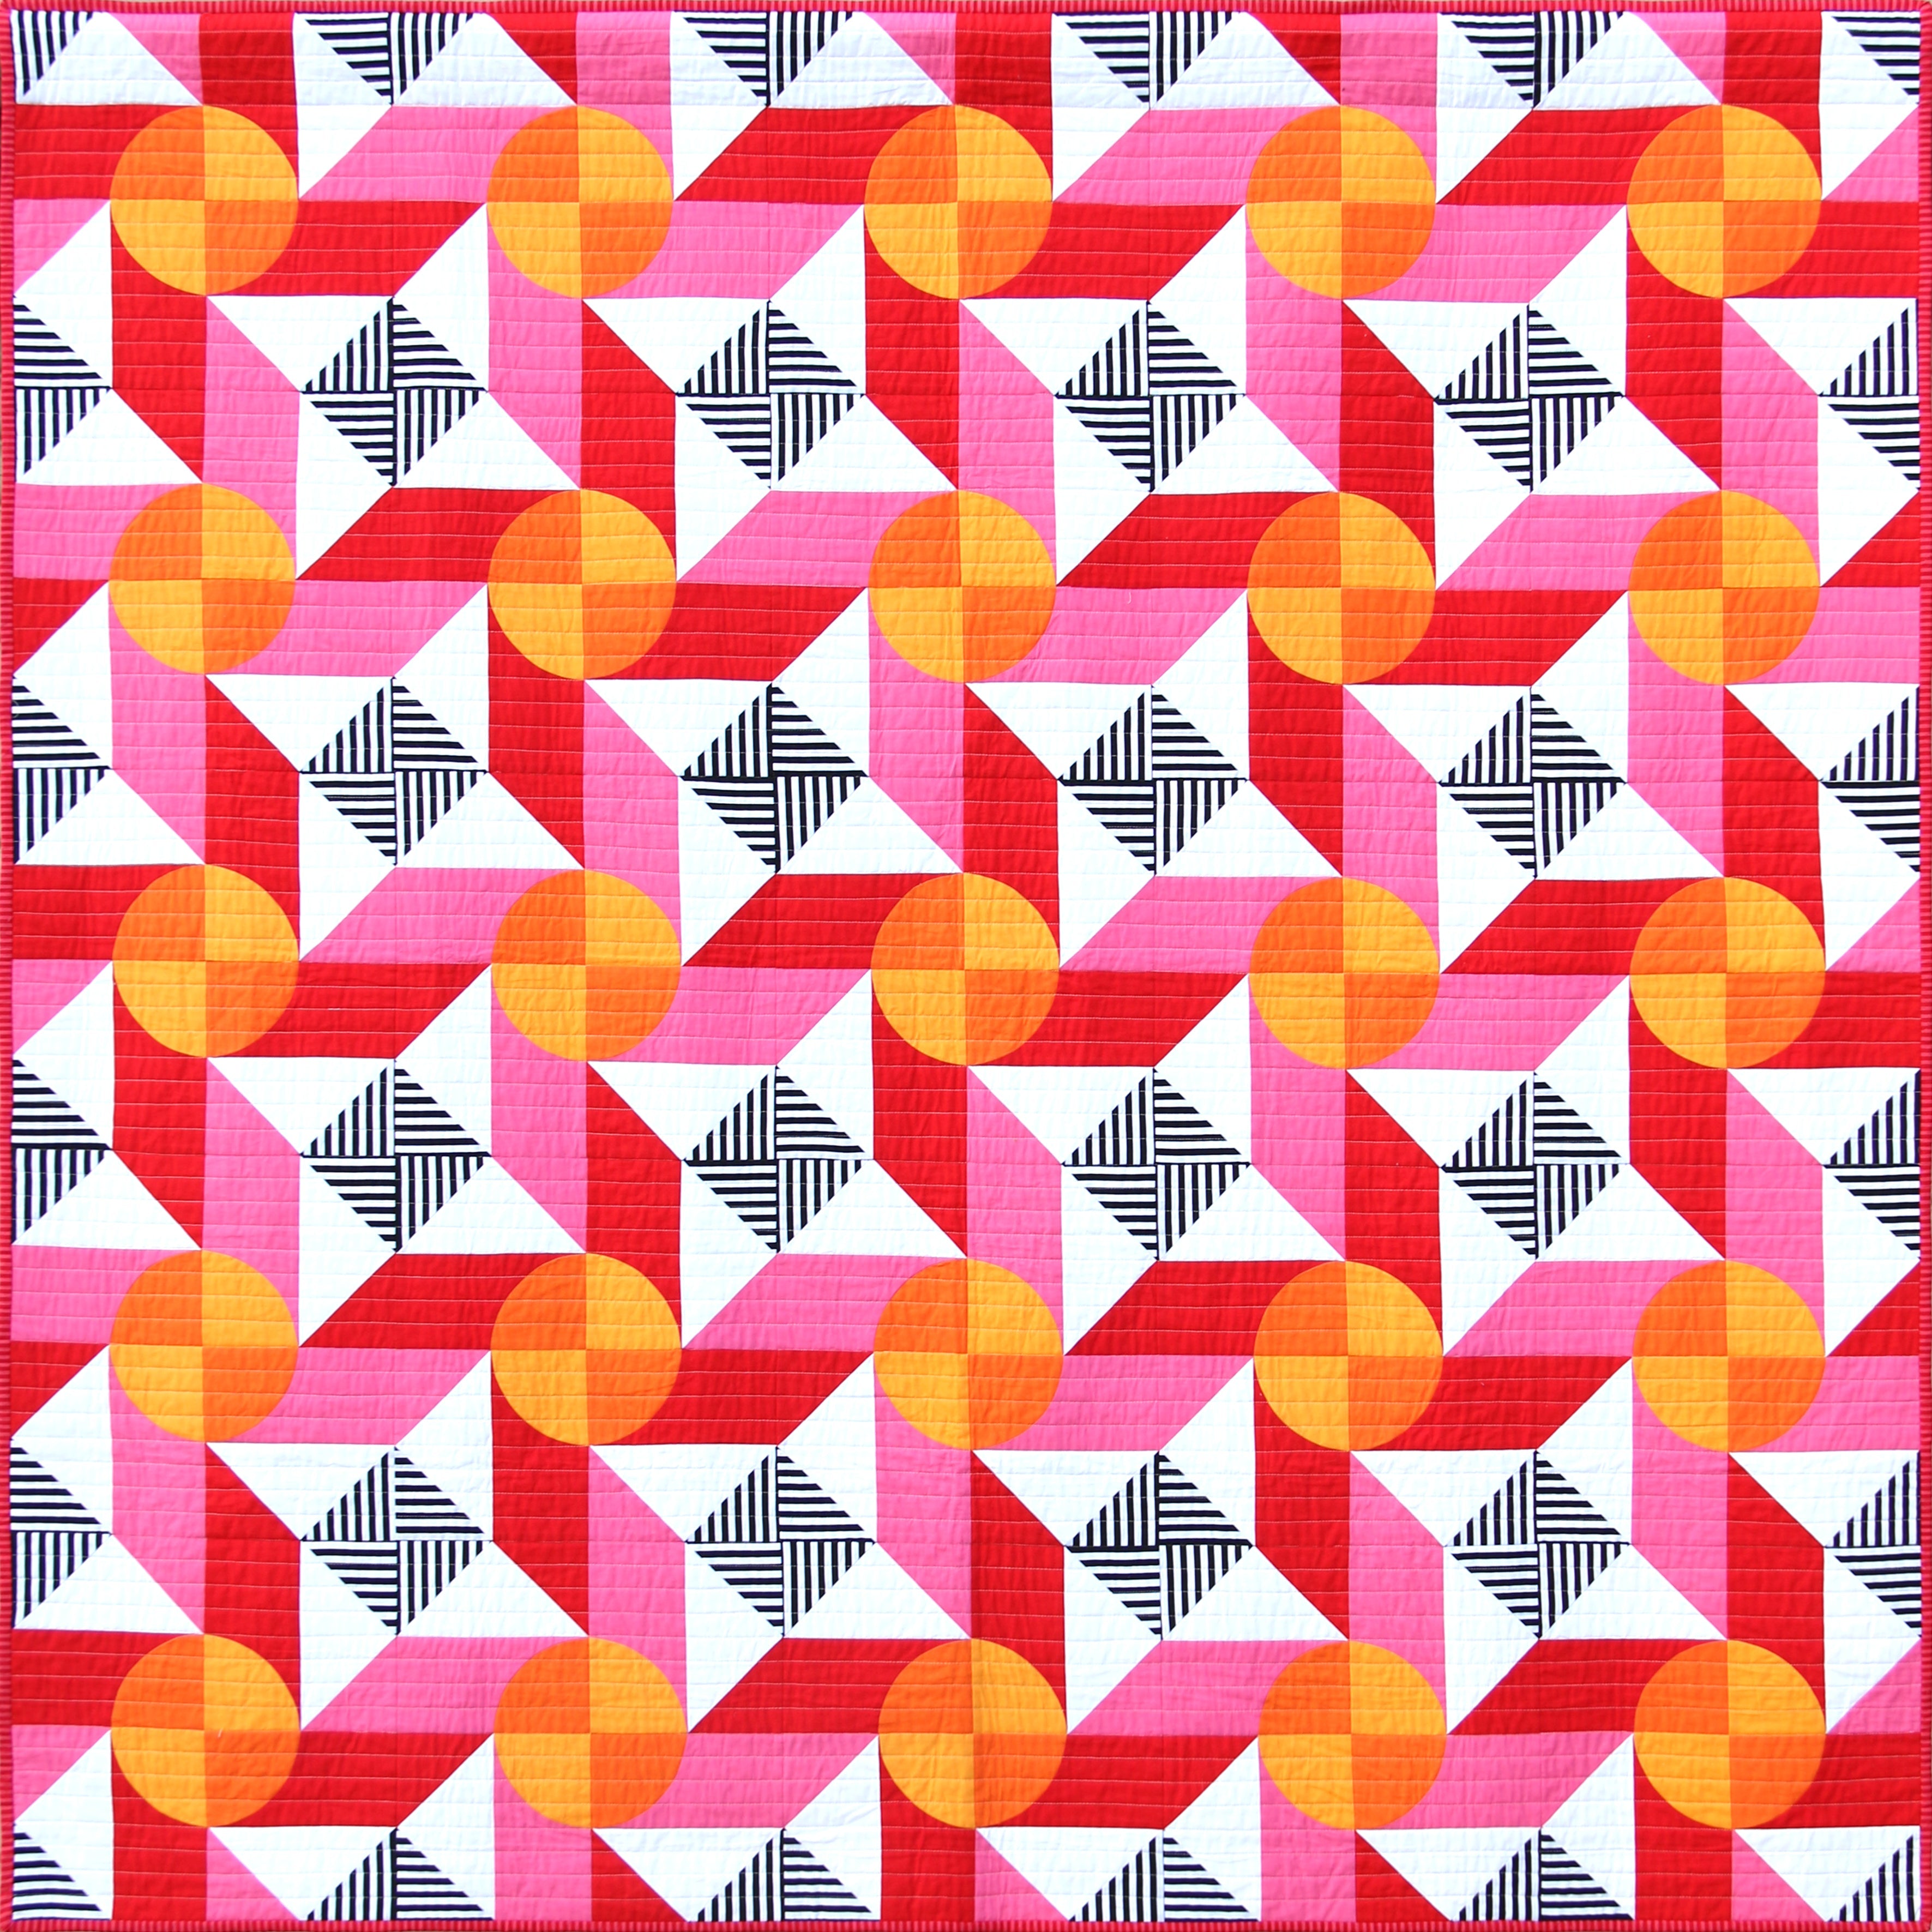 Around The Lake Quilt Pattern Version 2 - Printed